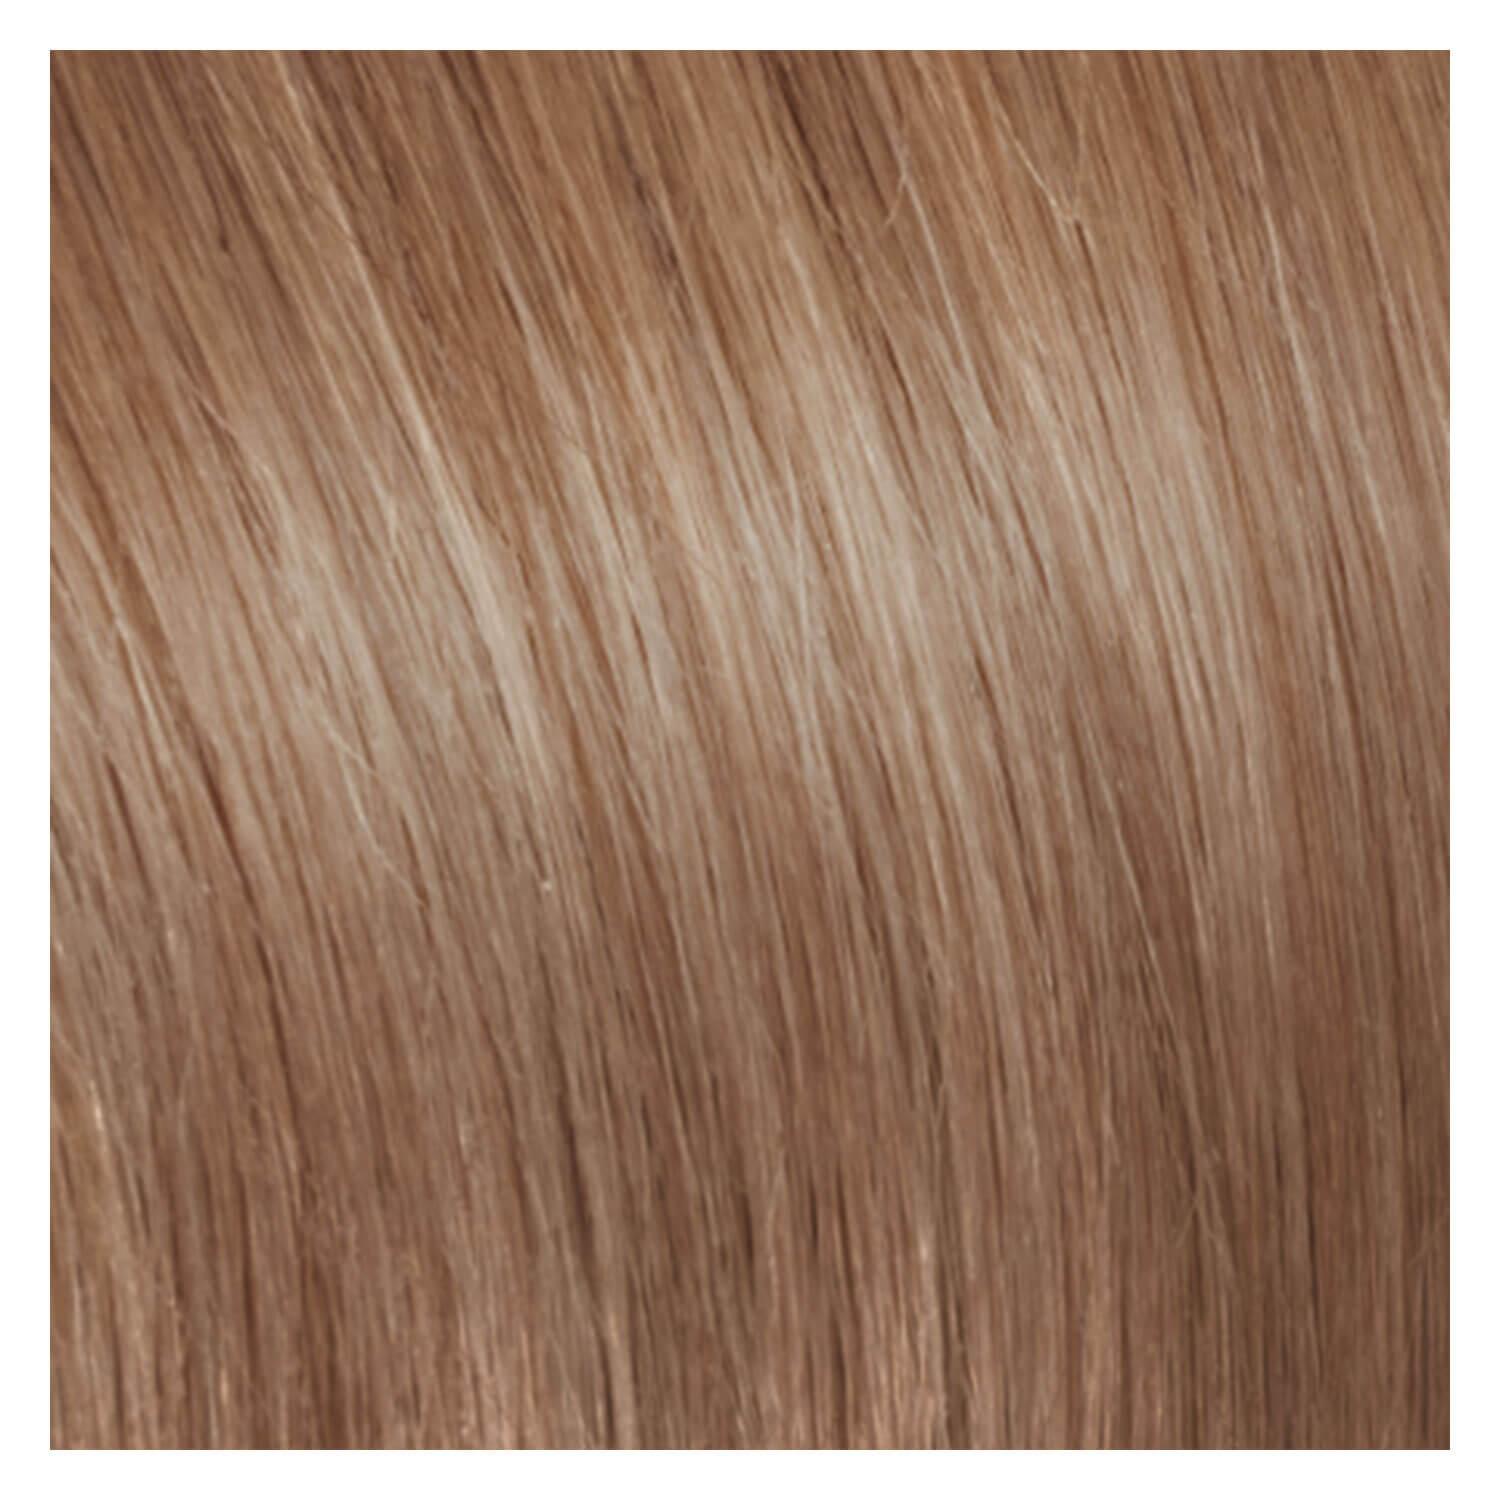 SHE Bonding-System Hair Extensions Wavy - 27 Mittel Goldblond 55/60cm